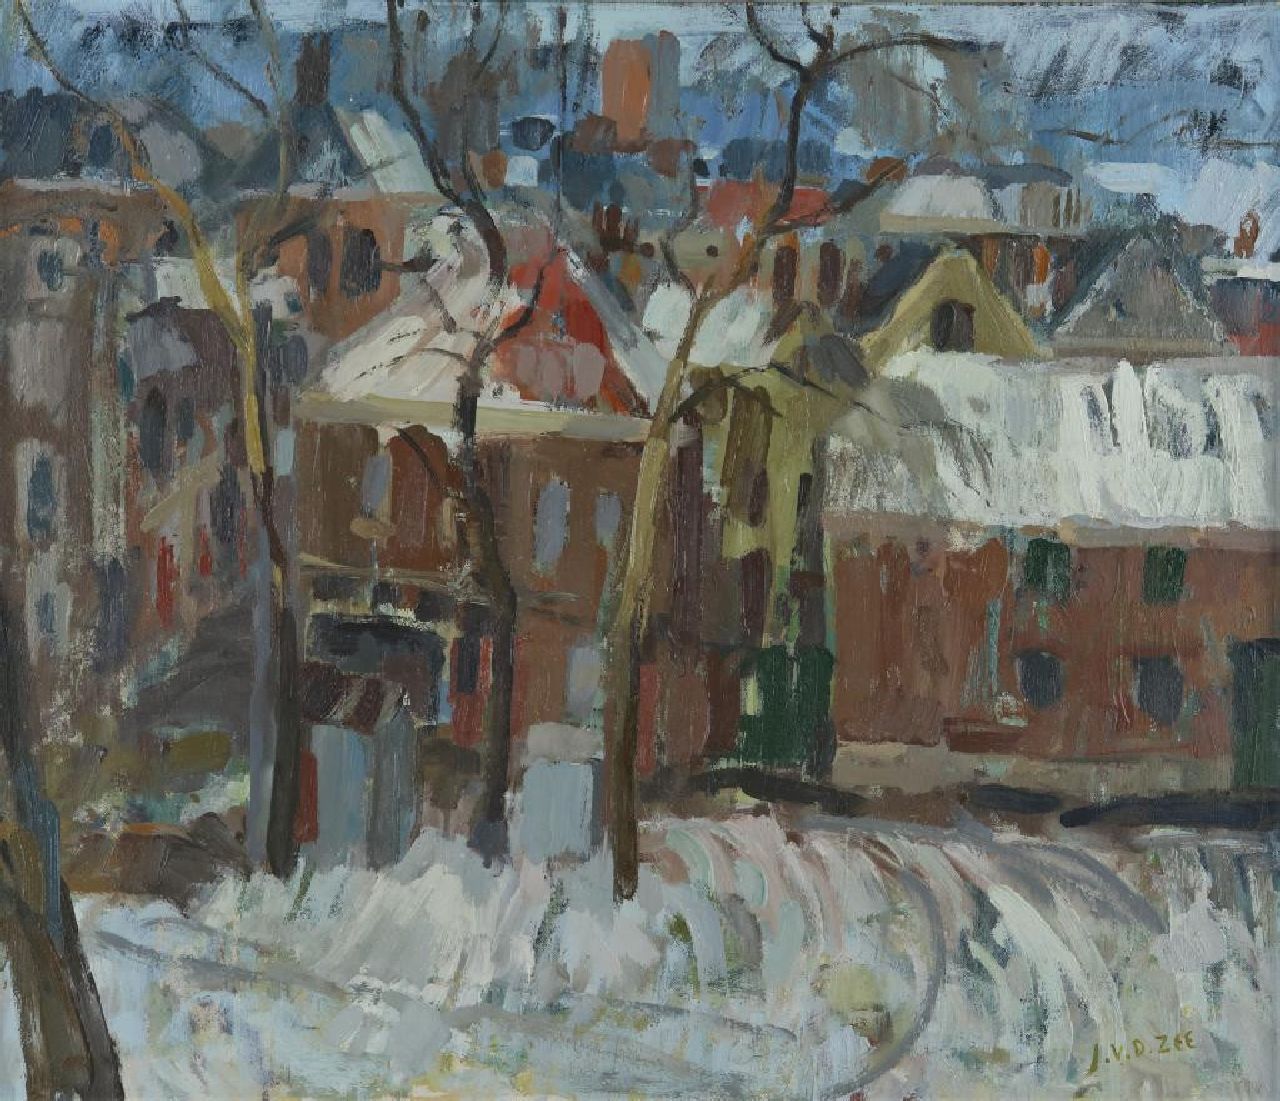 Zee J. van der | Jan van der Zee | Paintings offered for sale | A view of snowy Groningen, oil on canvas 59.8 x 70.1 cm, signed l.r.